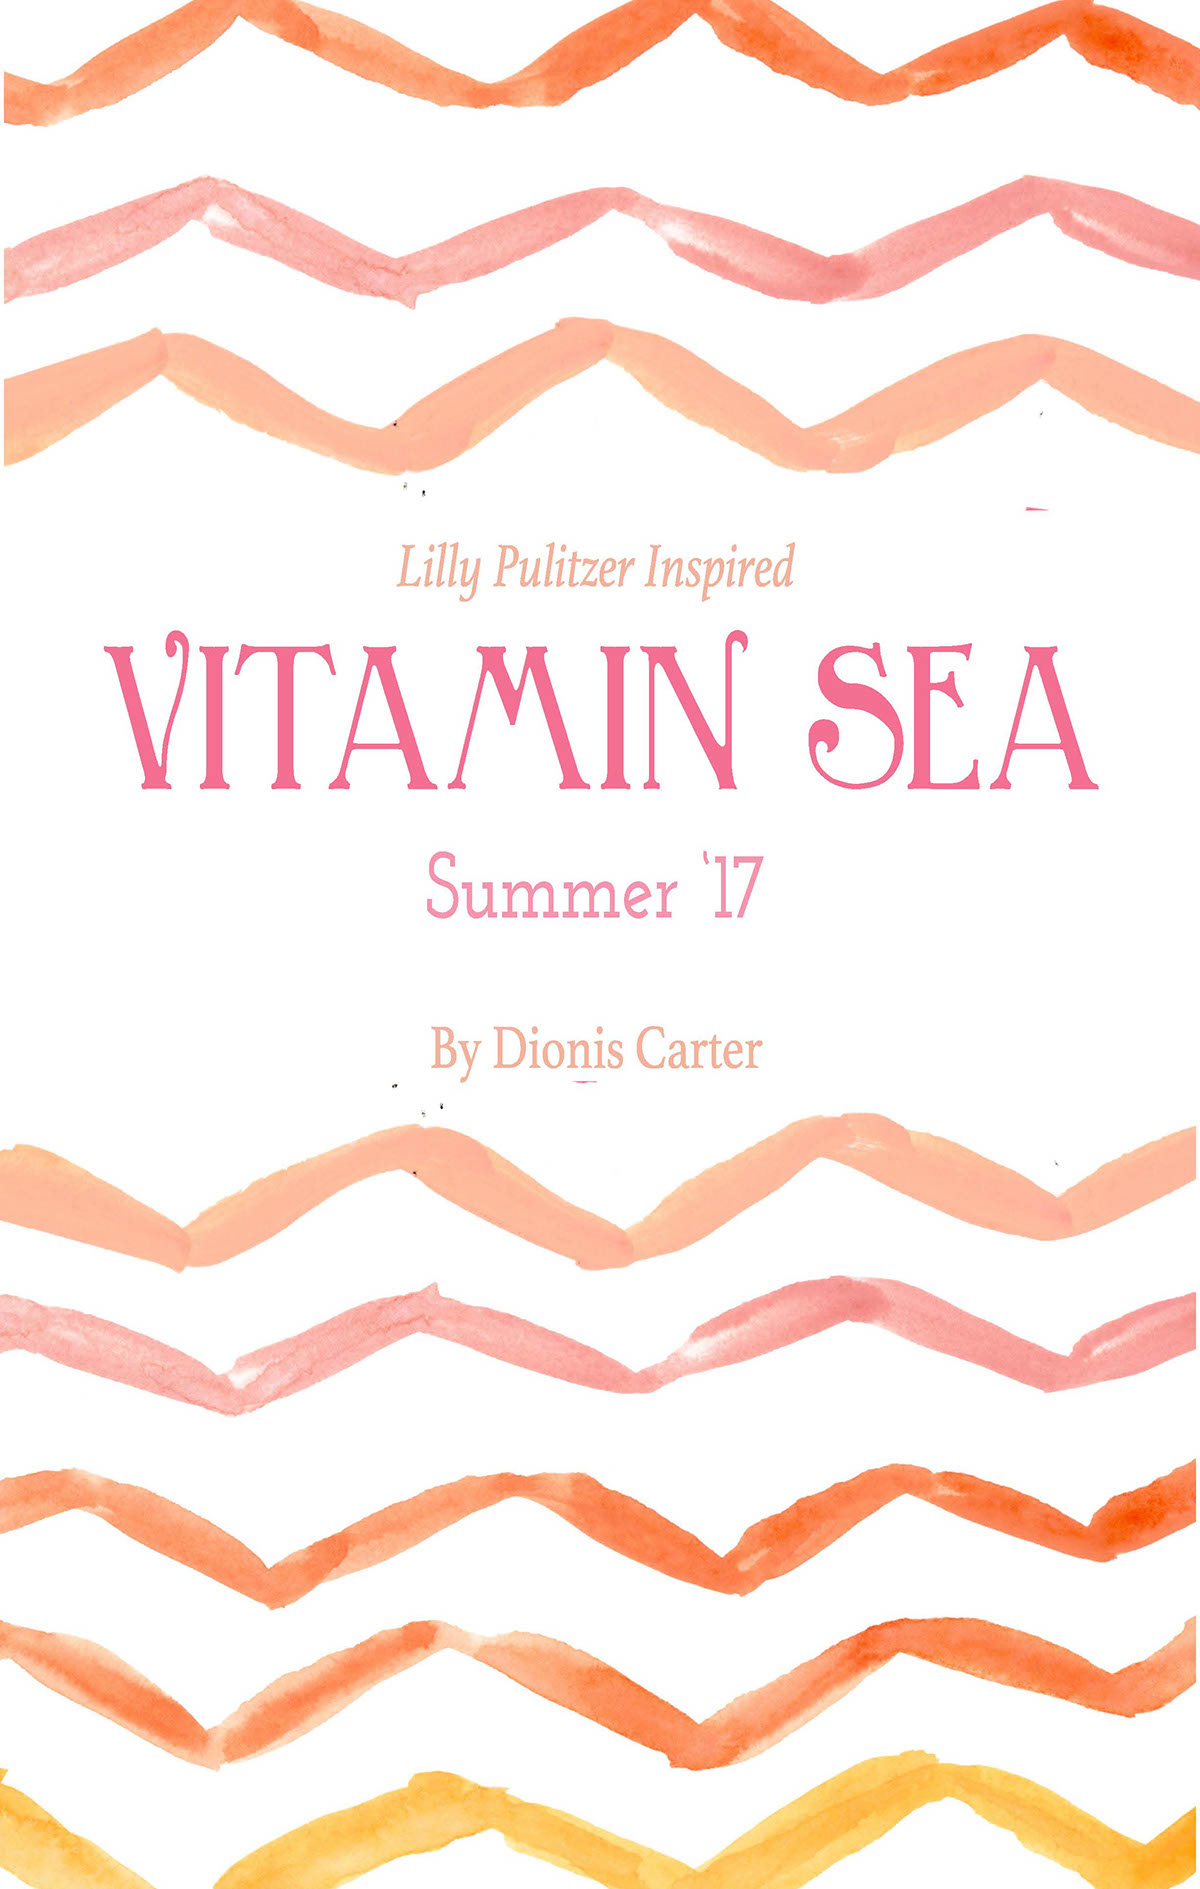 Lilly Pulitzer pattern mermaids lemonade pink Fun